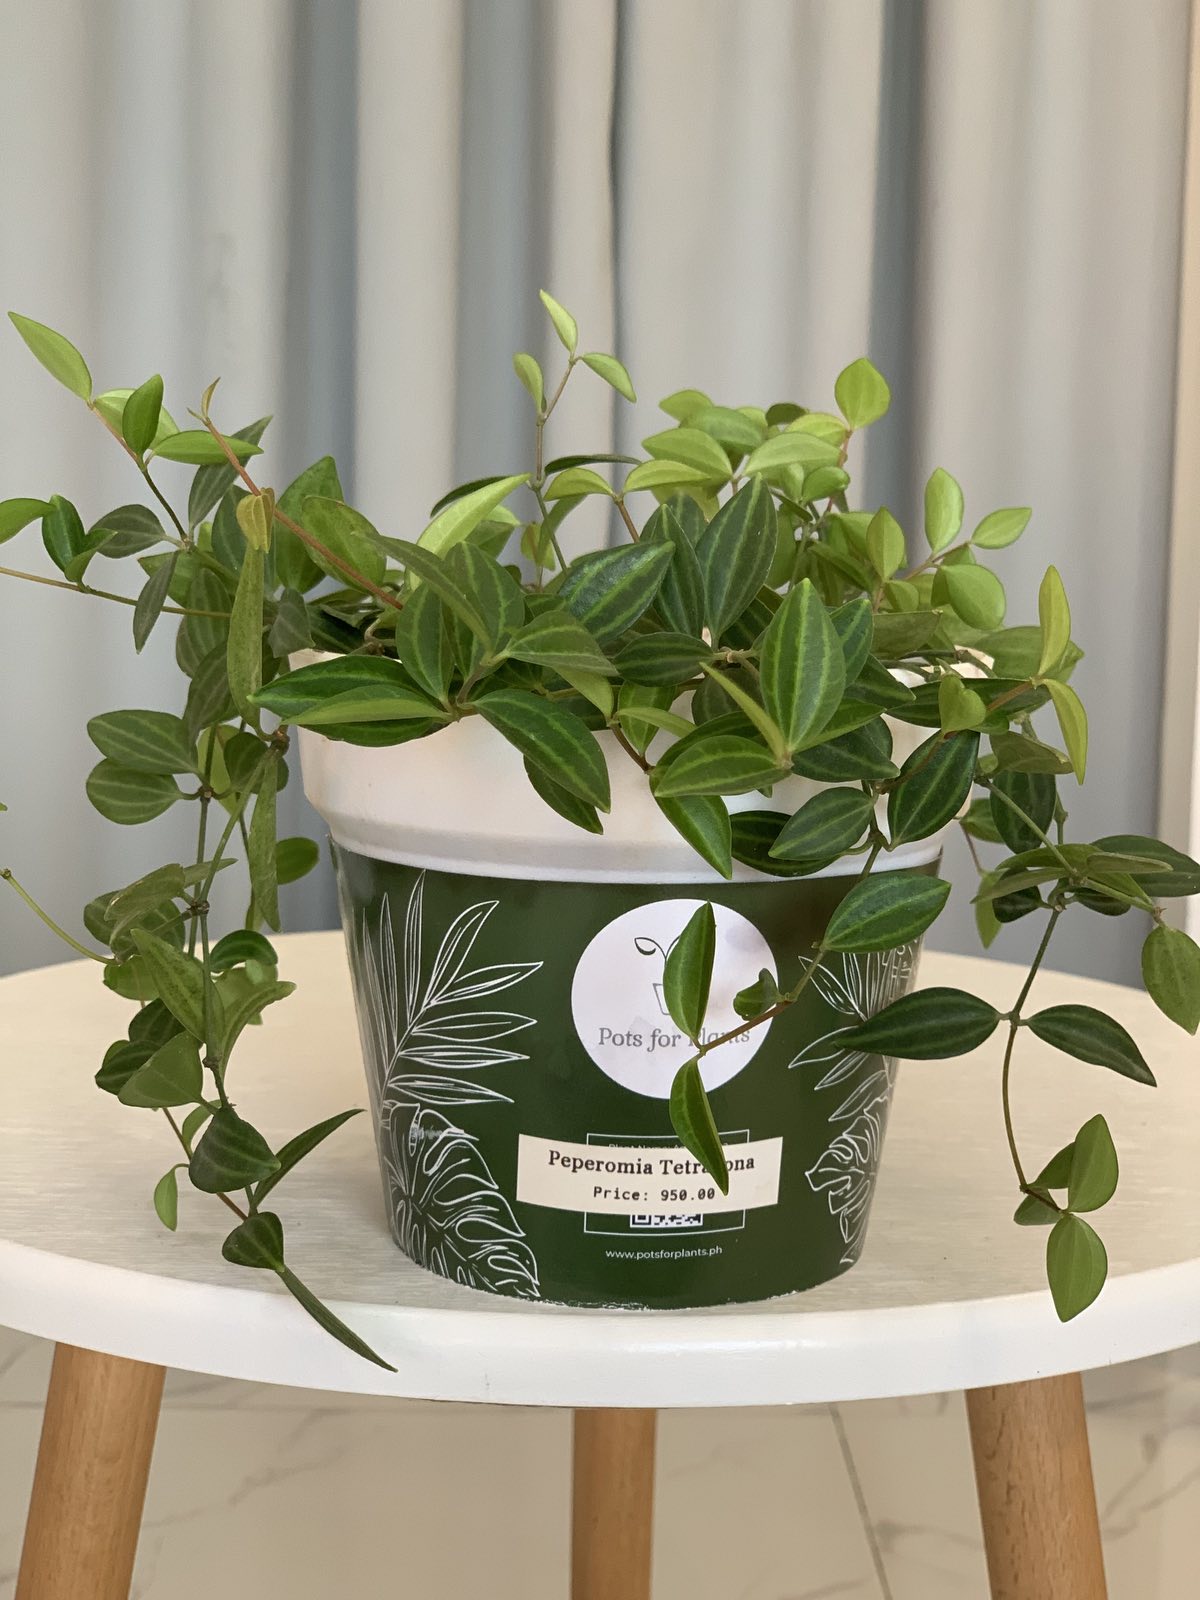 Peperomia Tetragona - Pots For Plants